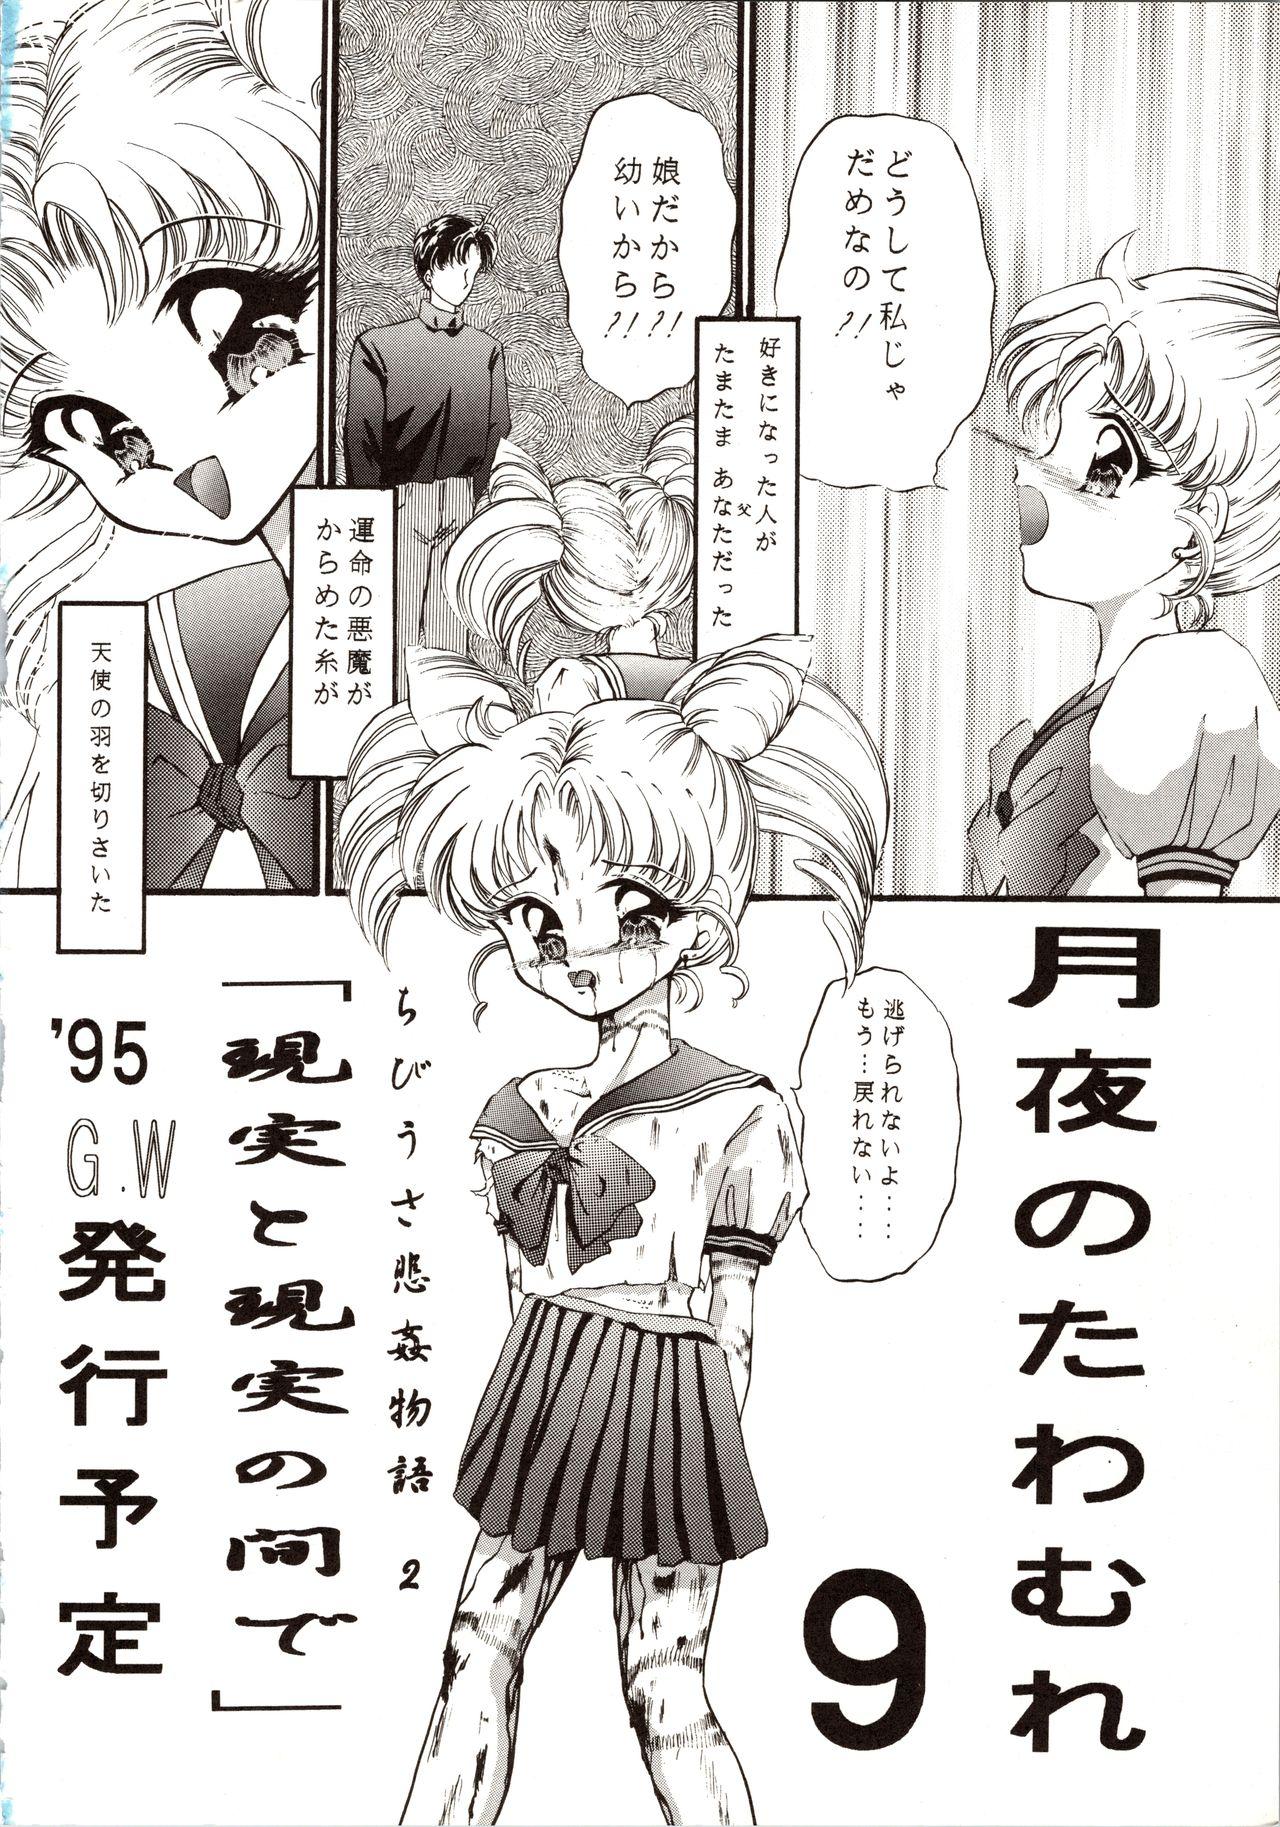 Bathroom Tsukiyo no Tawamure 8 - Sailor moon Legs - Page 38